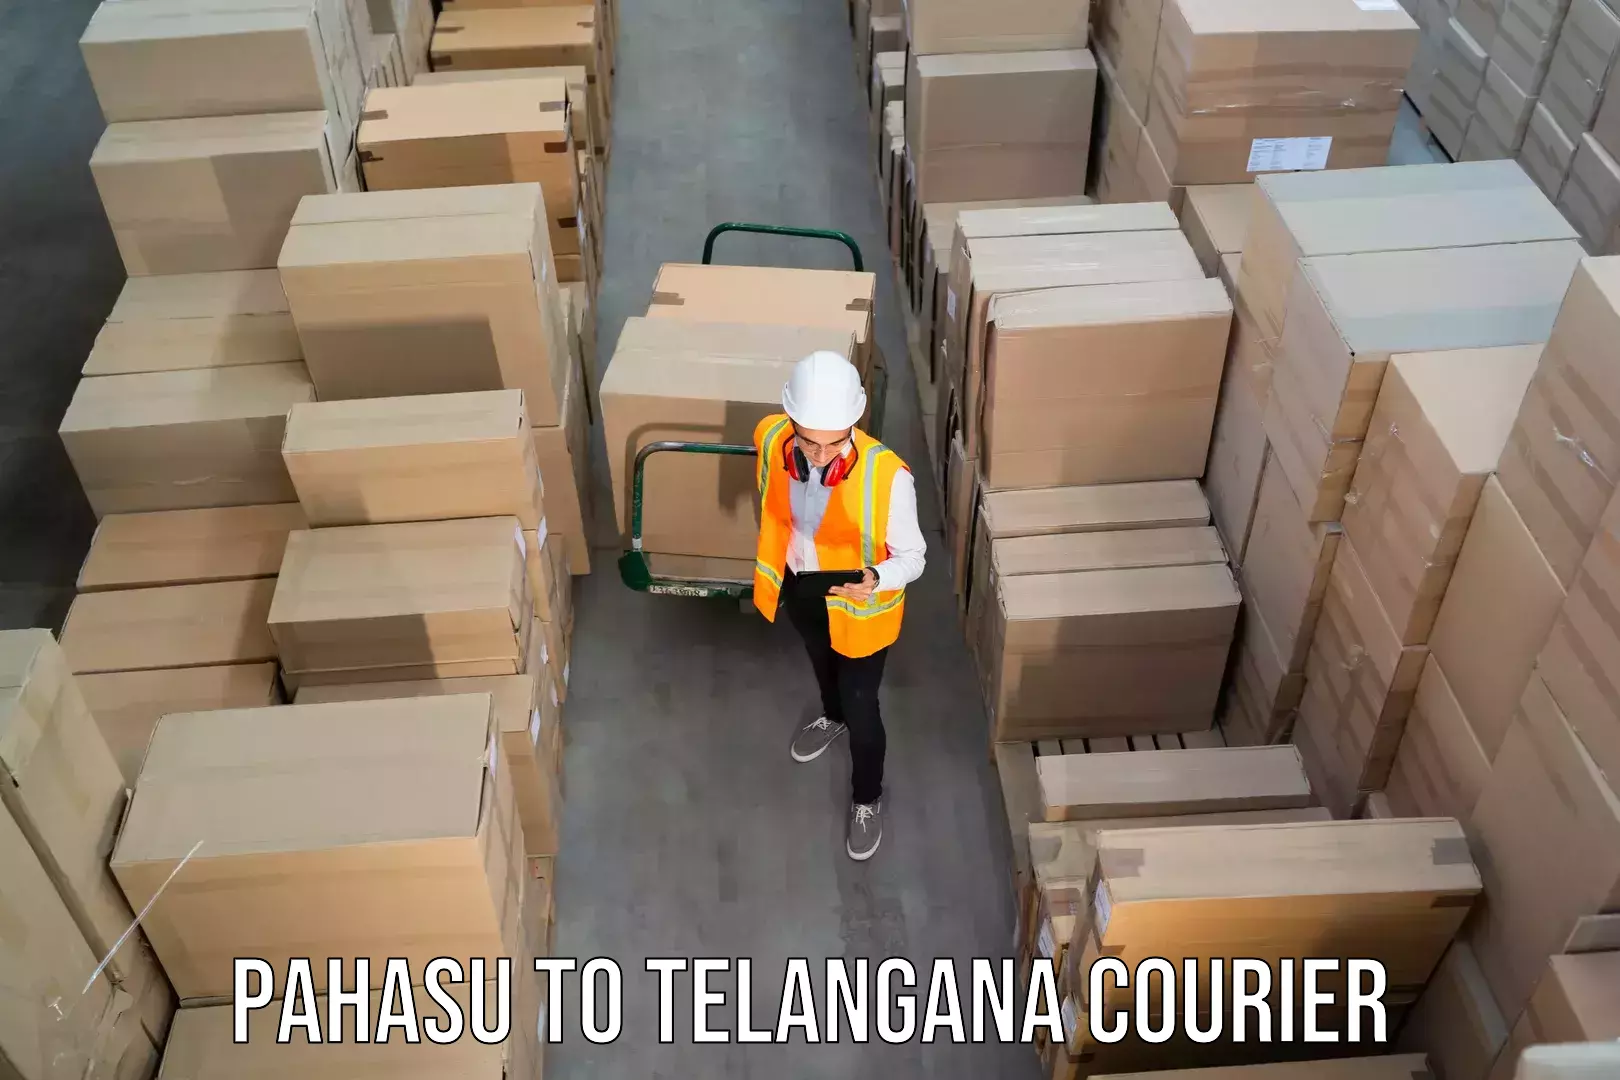 Digital courier platforms Pahasu to Telangana